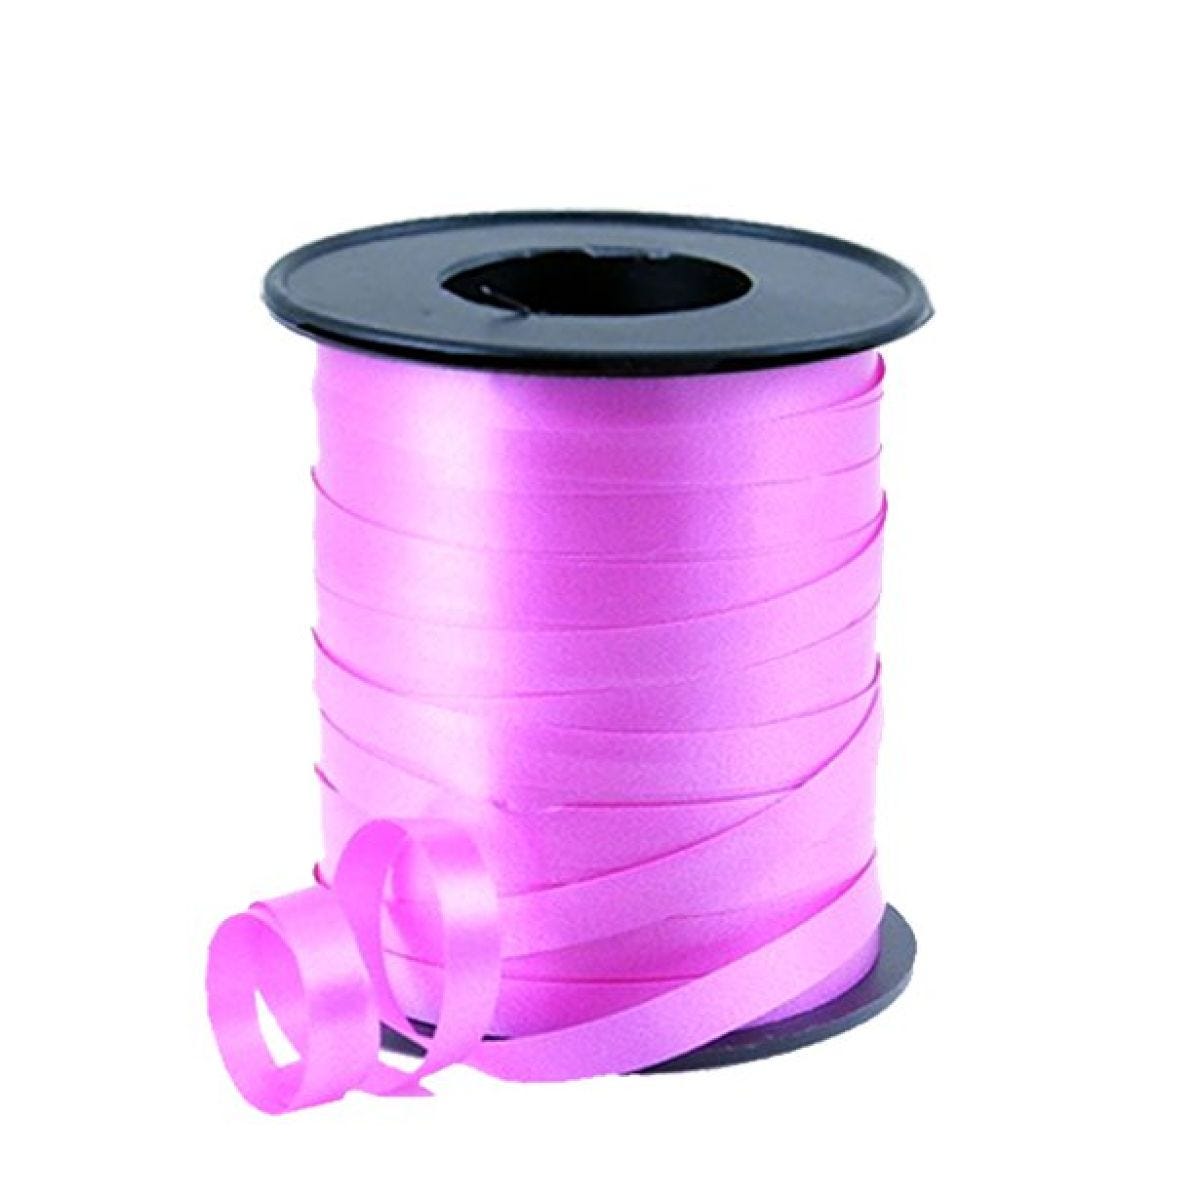 Hot Pink Curling Balloon Ribbon - 91m